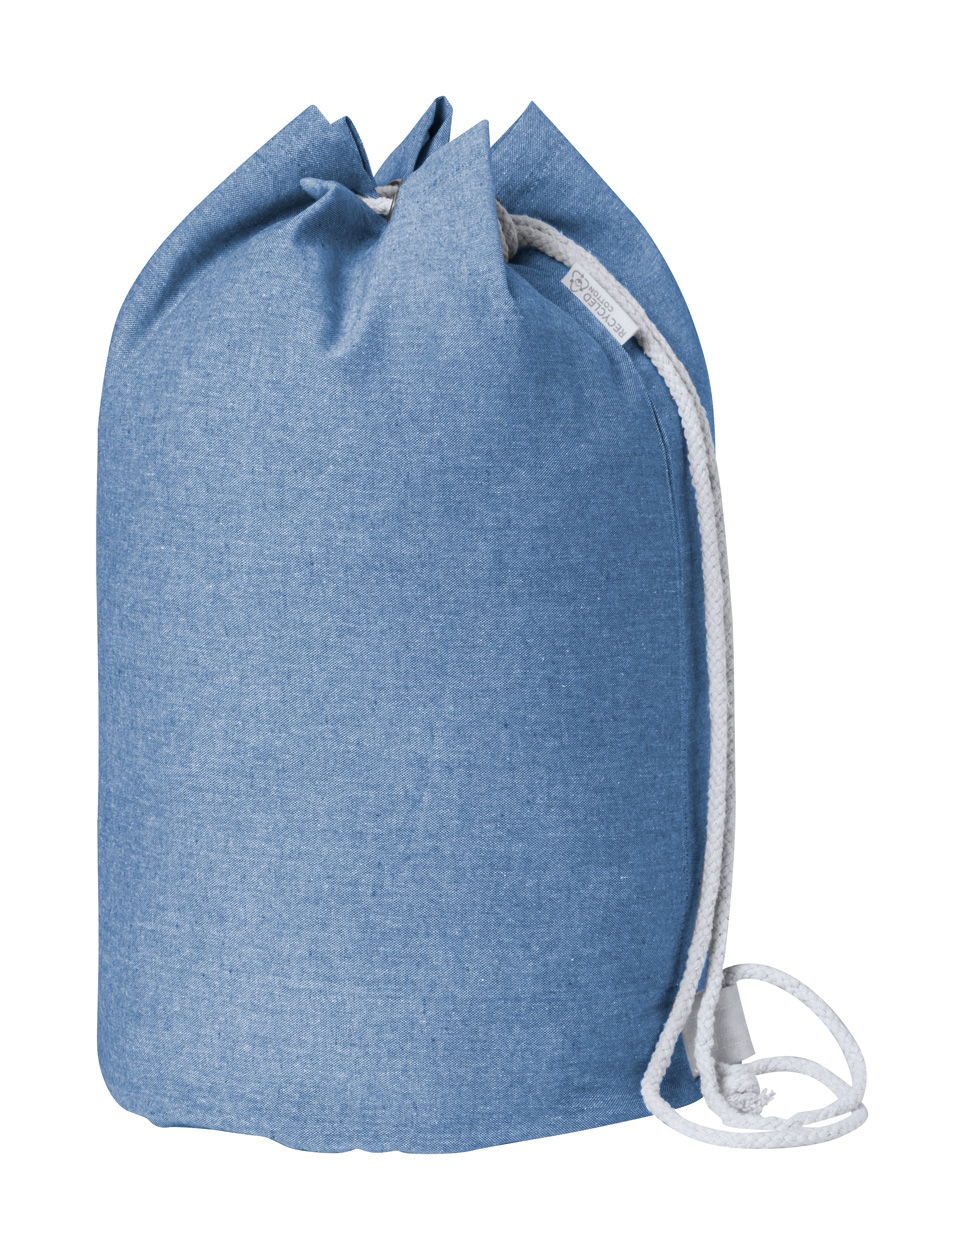 Bandam boat bag - blau